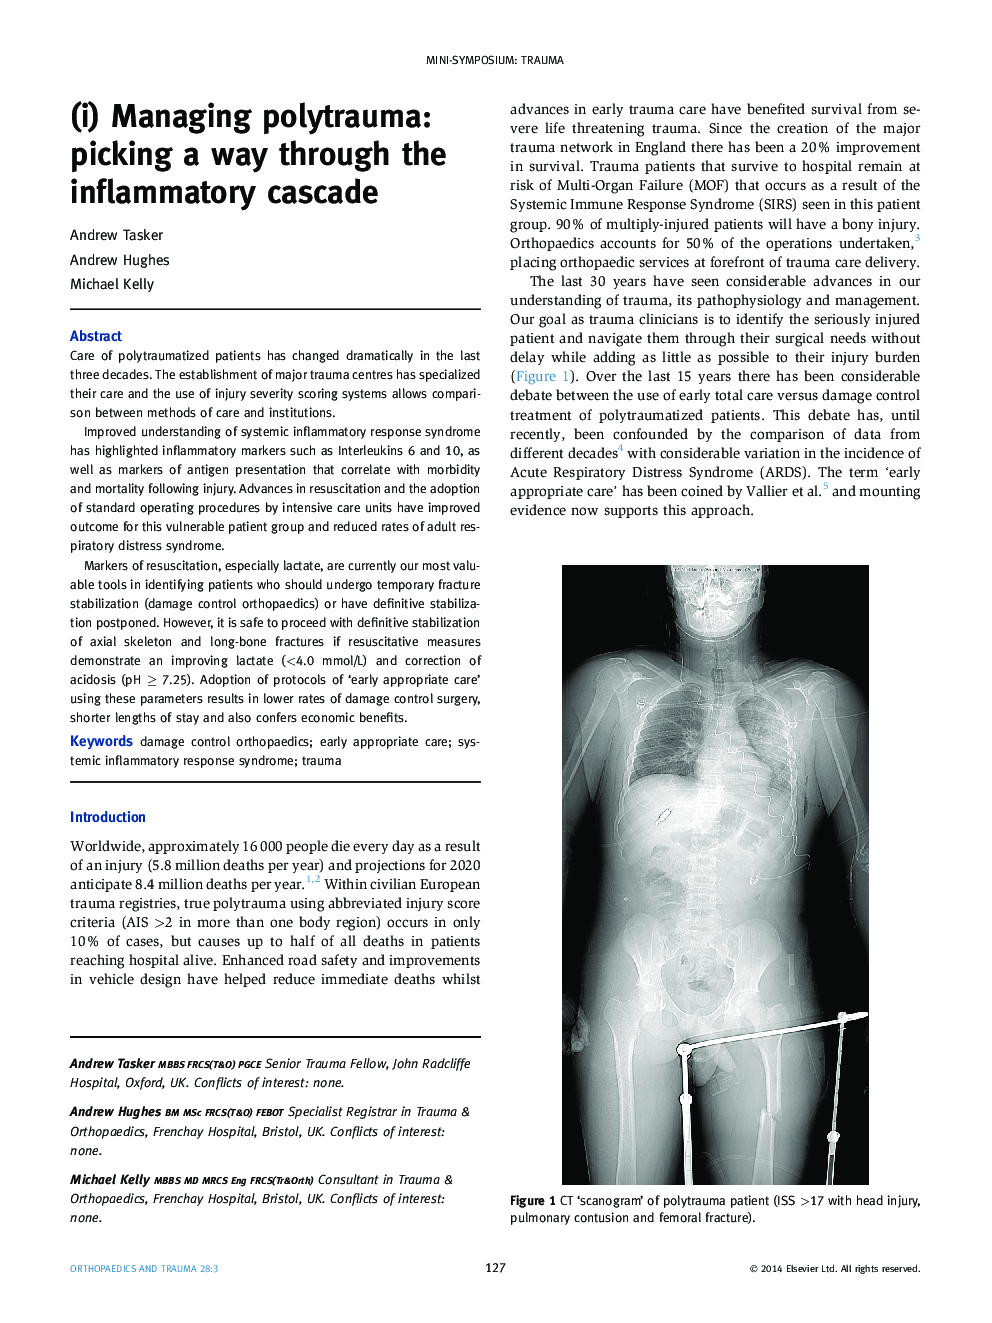 (i) Managing polytrauma: picking a way through the inflammatory cascade